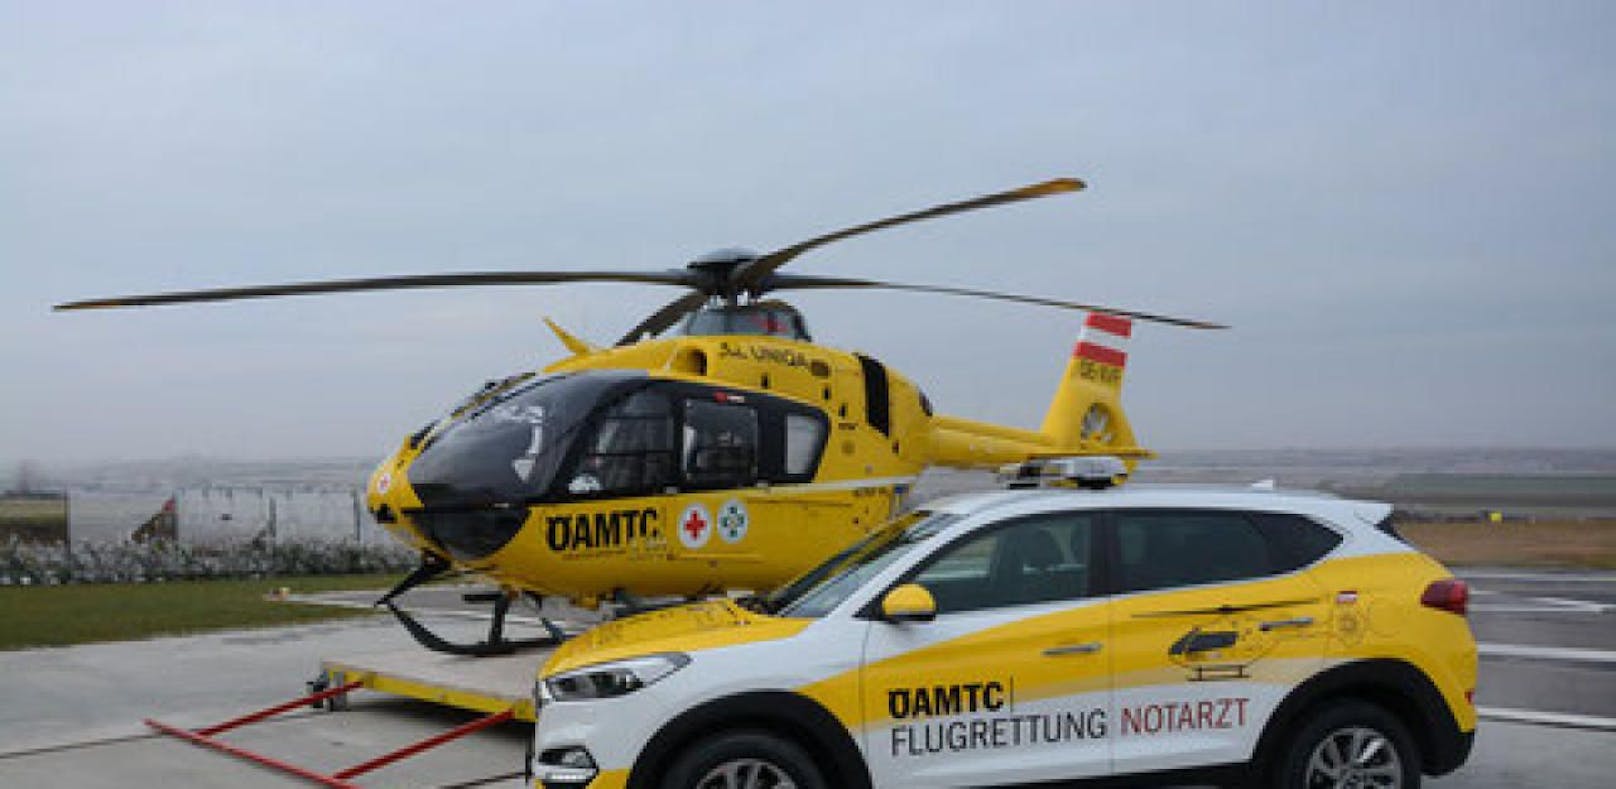 Per ÖAMTC-Notarztheli wurde Opfer ins Spital geflogen.